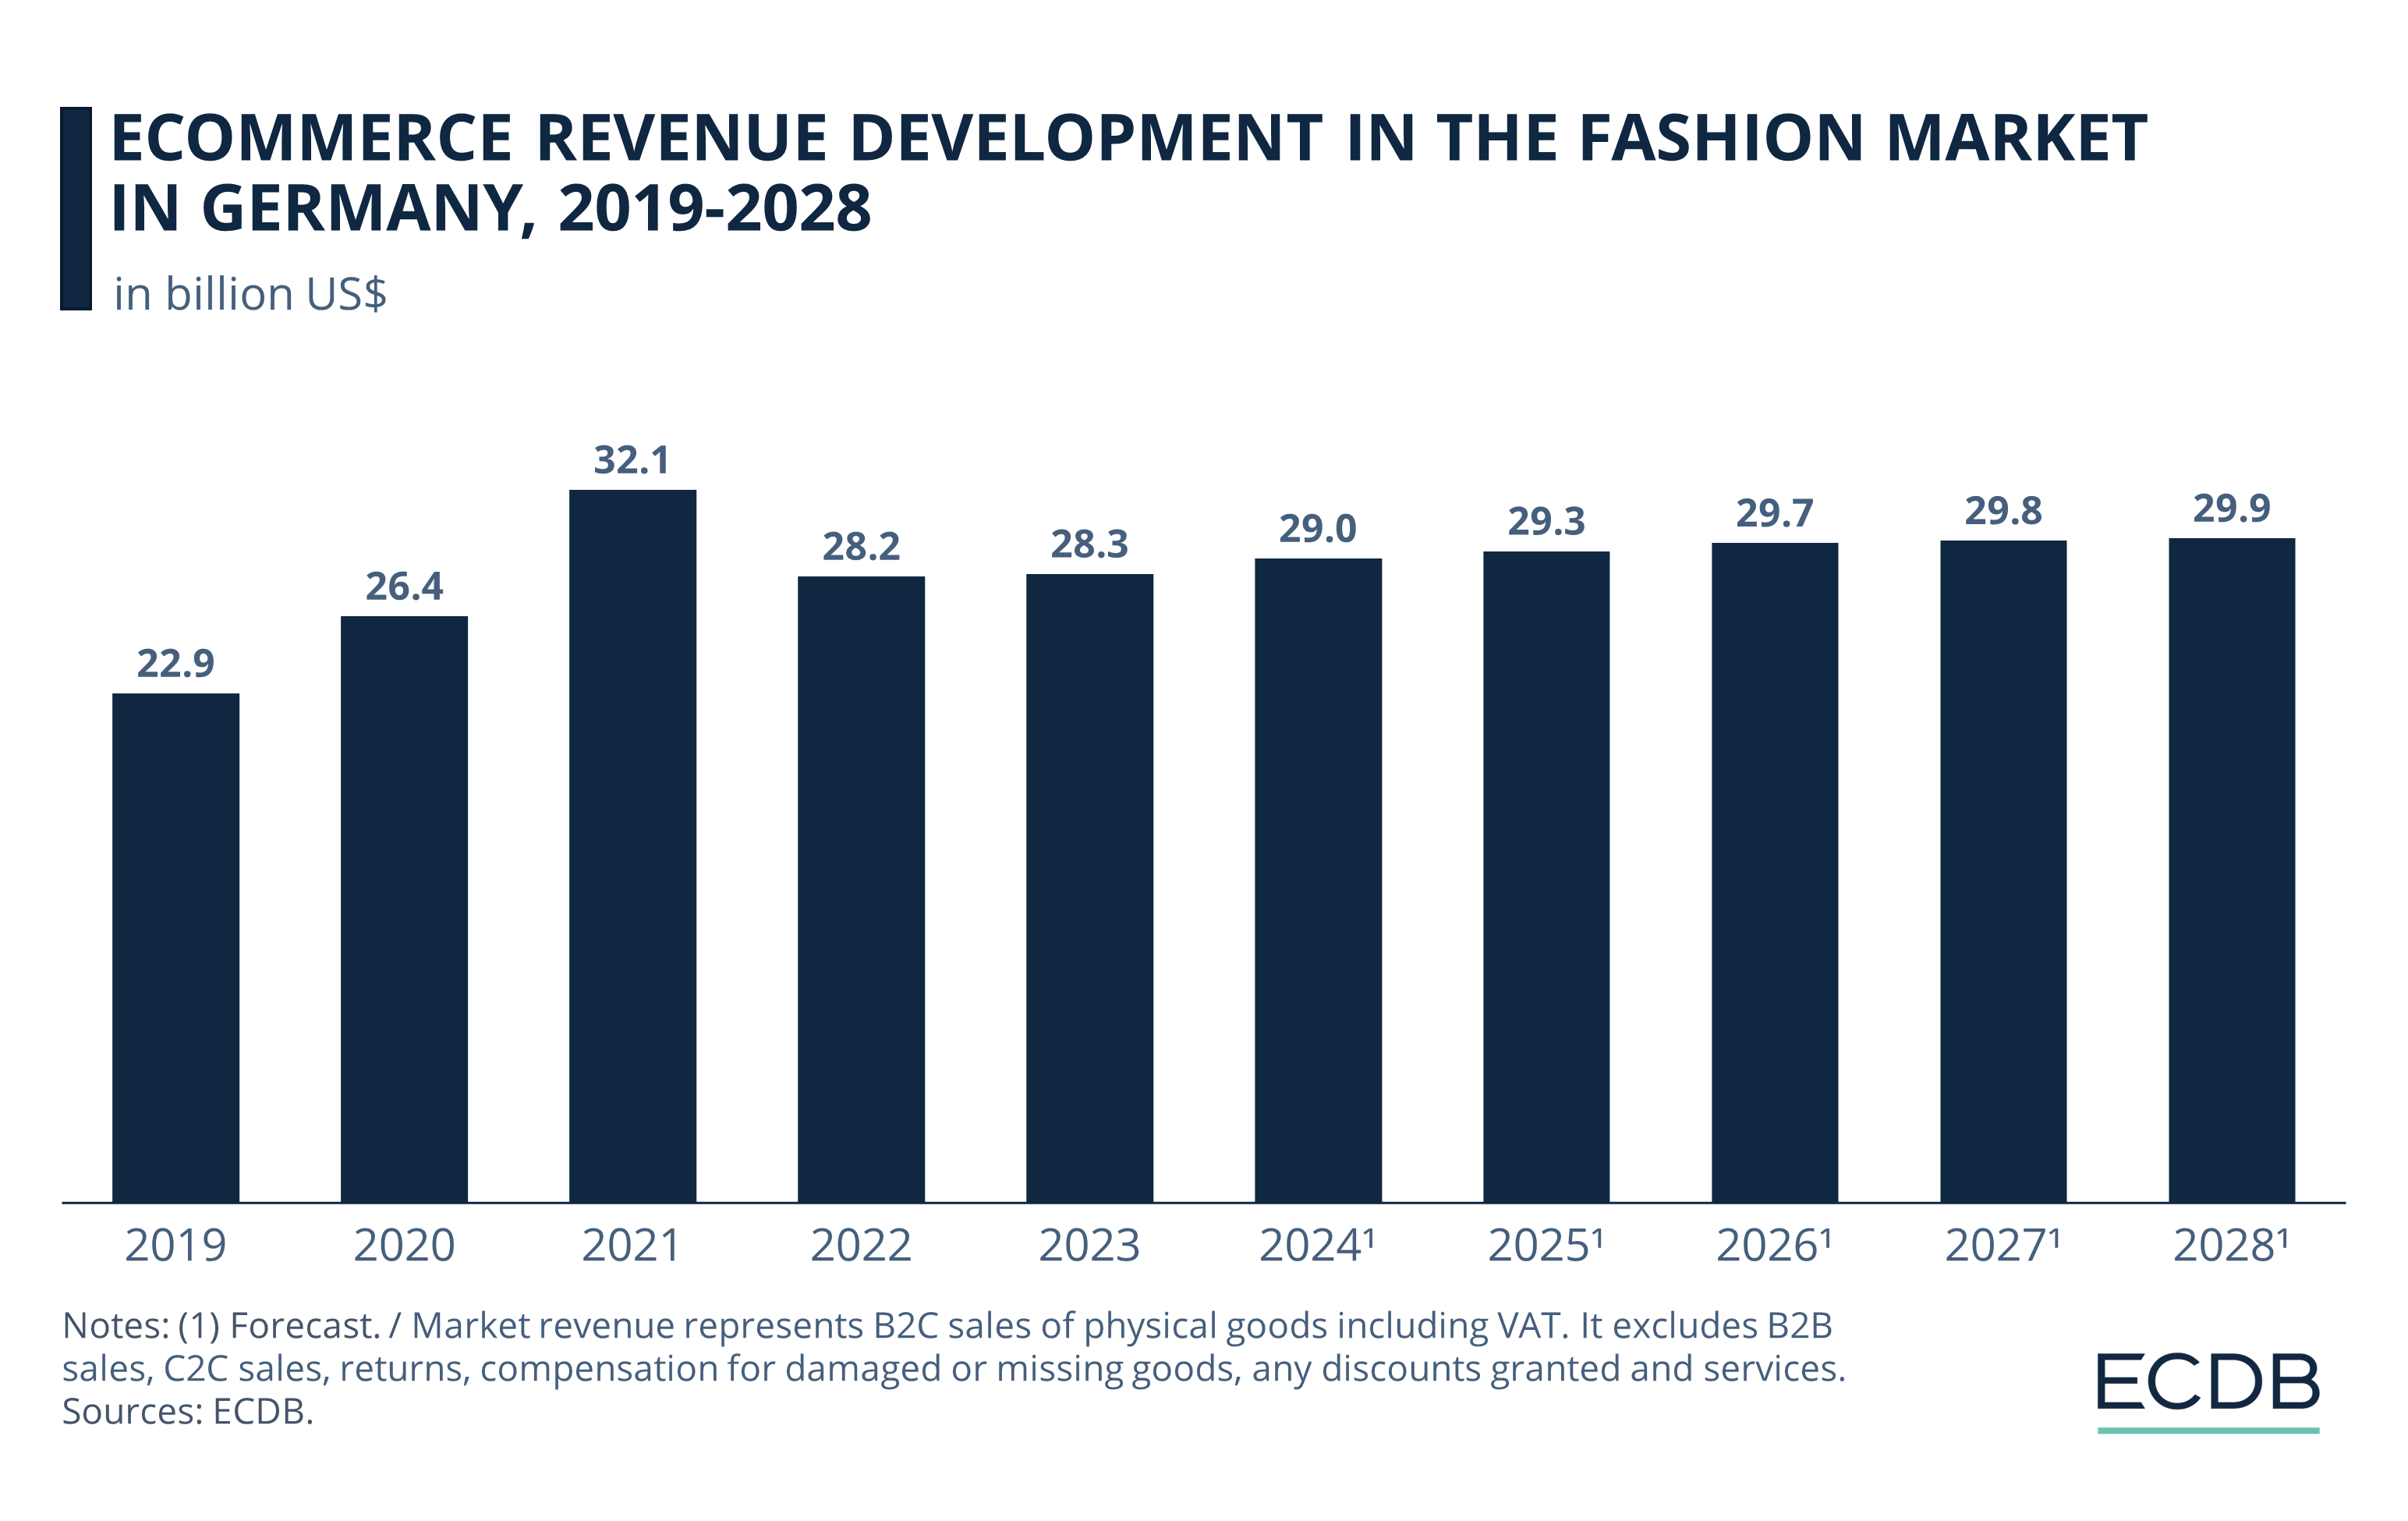 eCommerce Revenue Development in the Fashion Market in Germany, 2019-2027